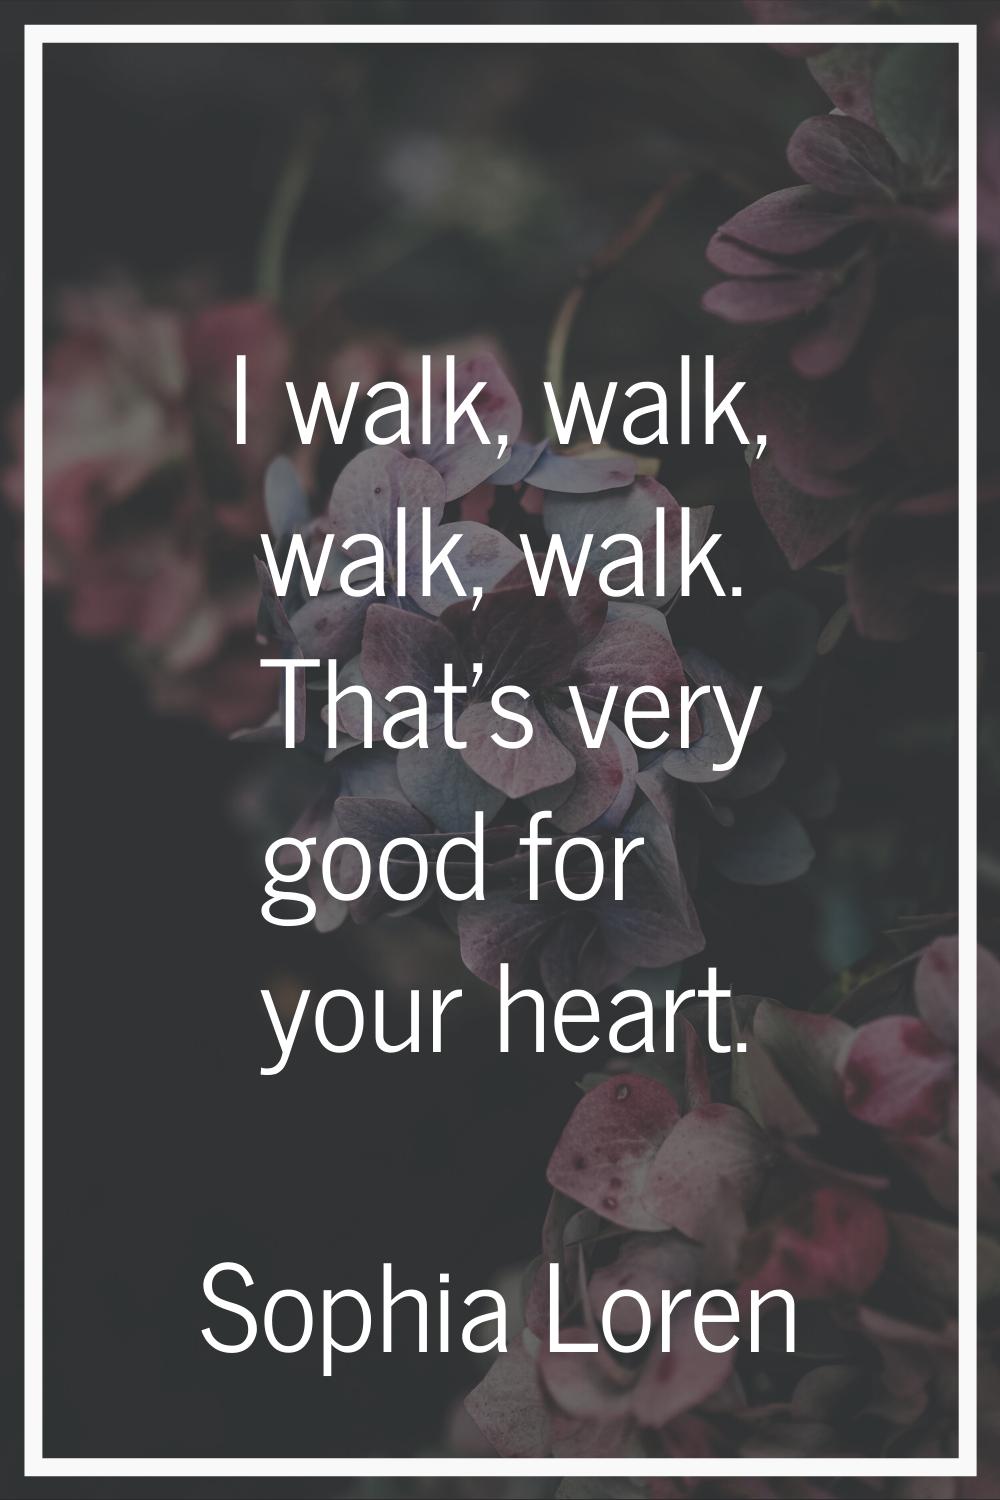 I walk, walk, walk, walk. That's very good for your heart.